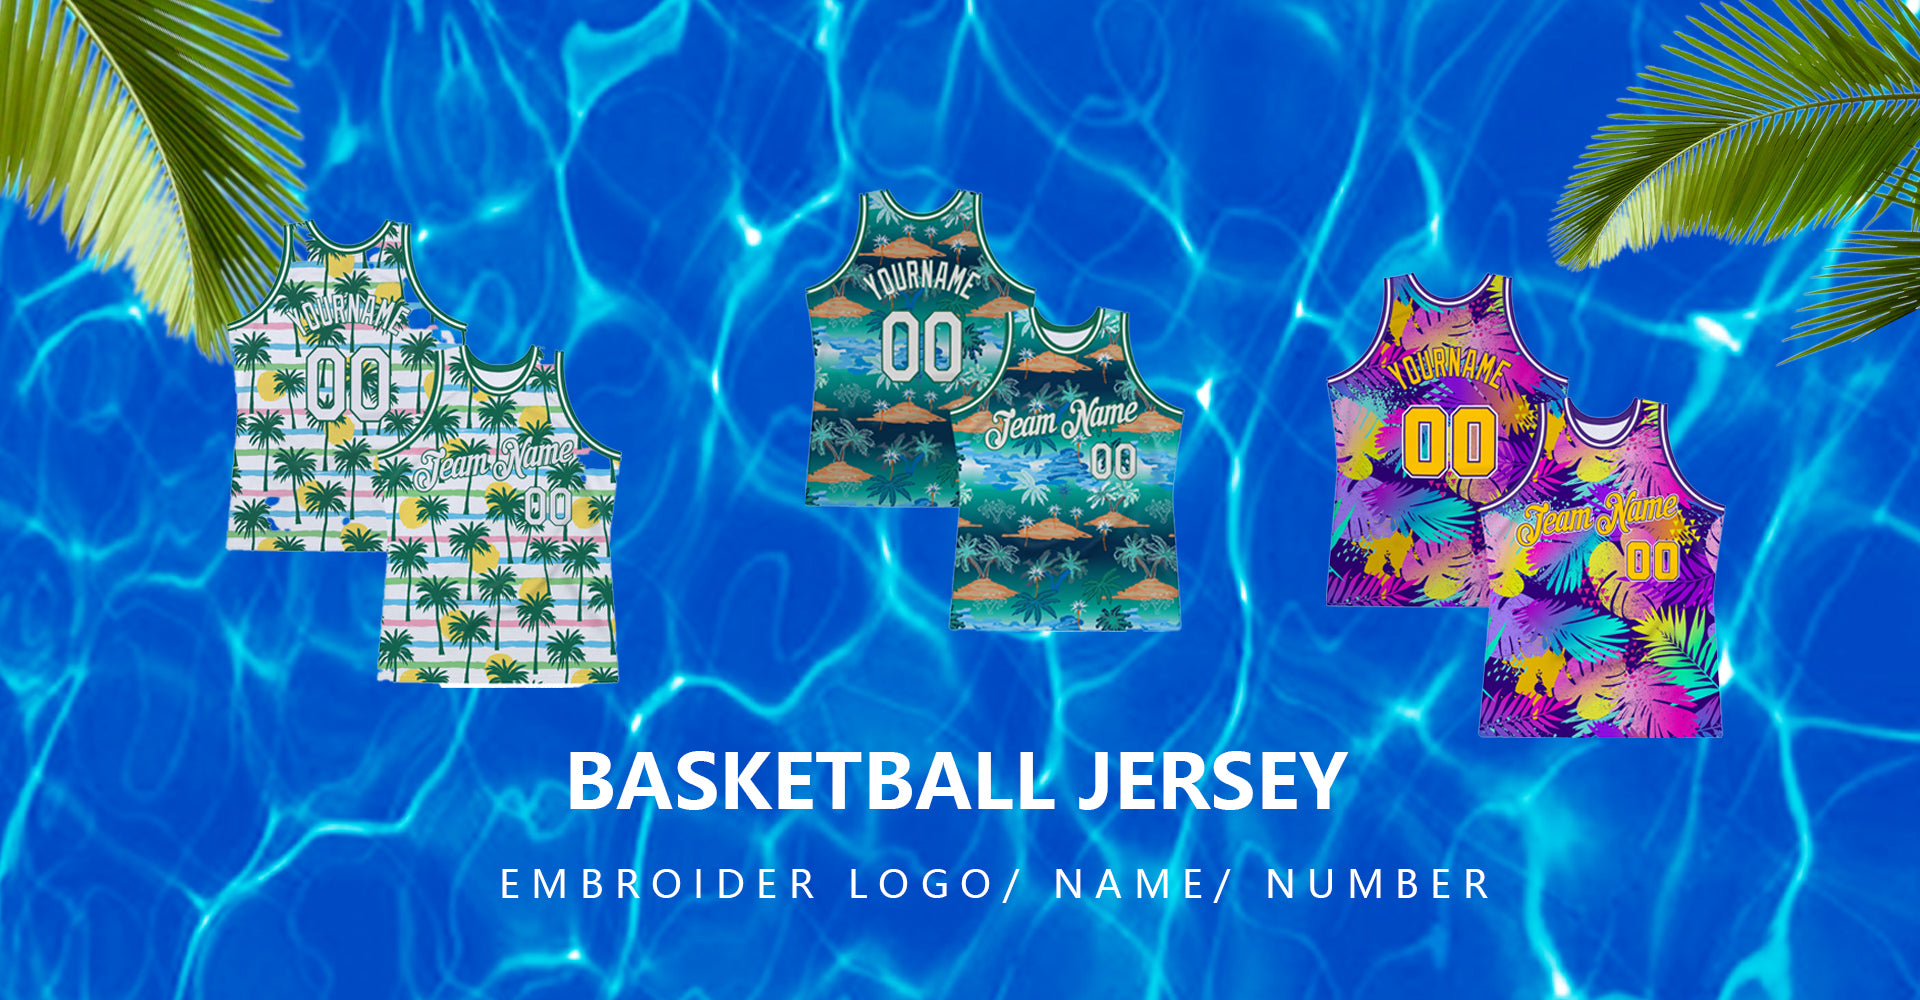 Custom Neon Green Basketball Games Jerseys Green Sports V Tank Top Tagged Basketball  Uniform - FansIdea